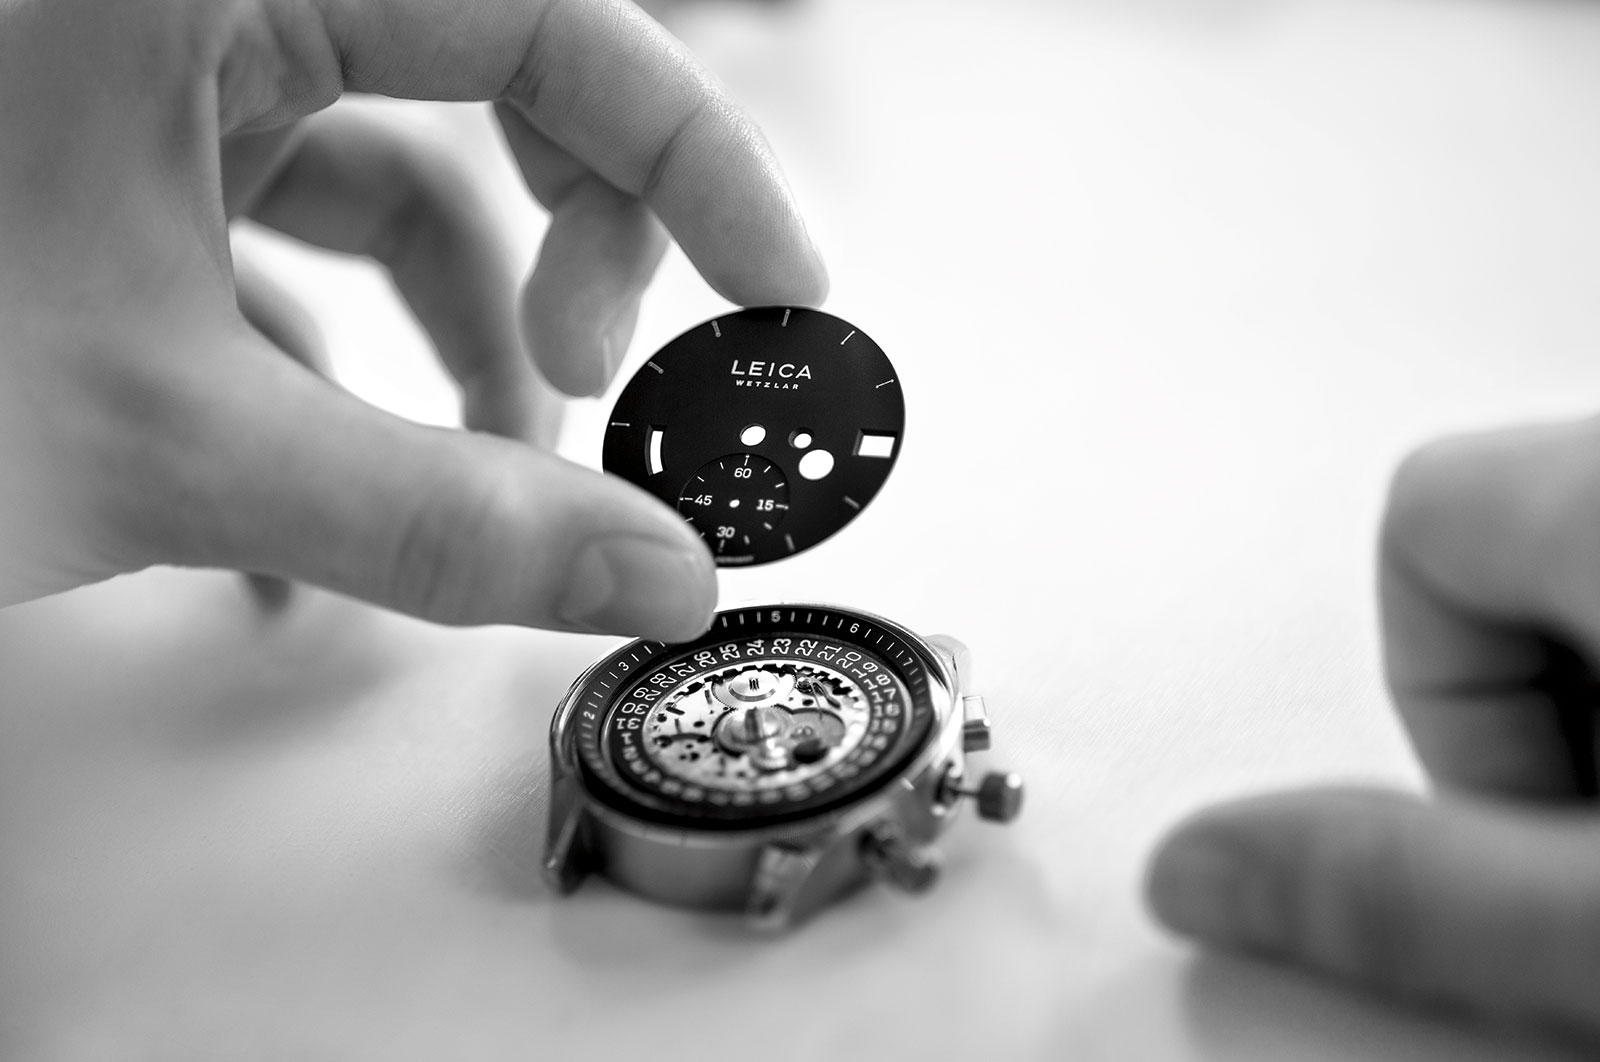 Leica-watch-L1-L2-02.jpg